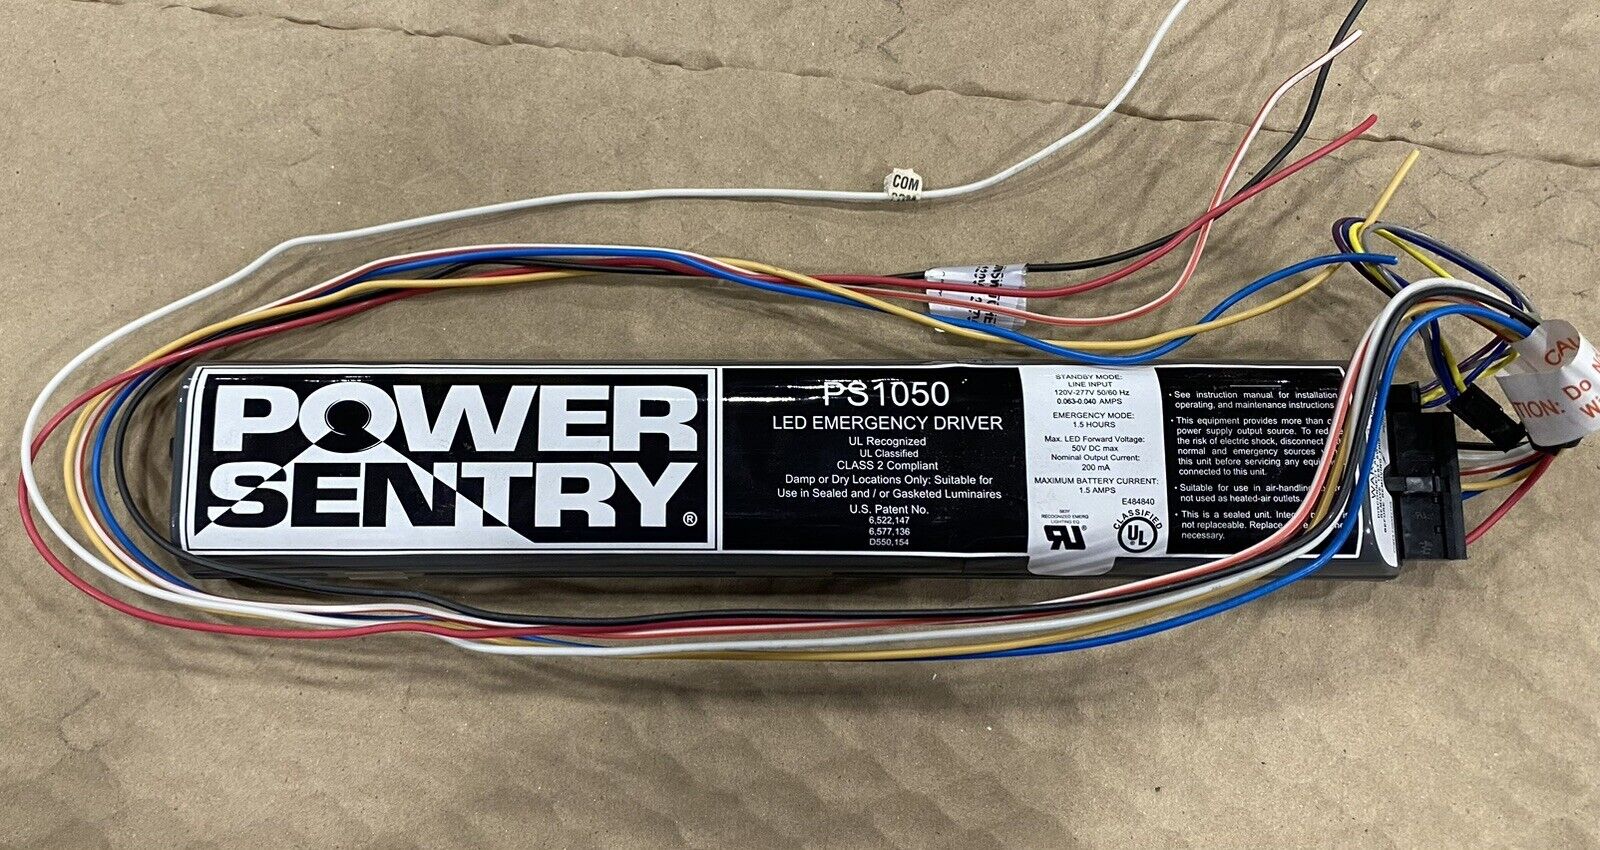 Power Sentry PS1050 LED Emergency Driver - Open Box - READ DESCRIPTION